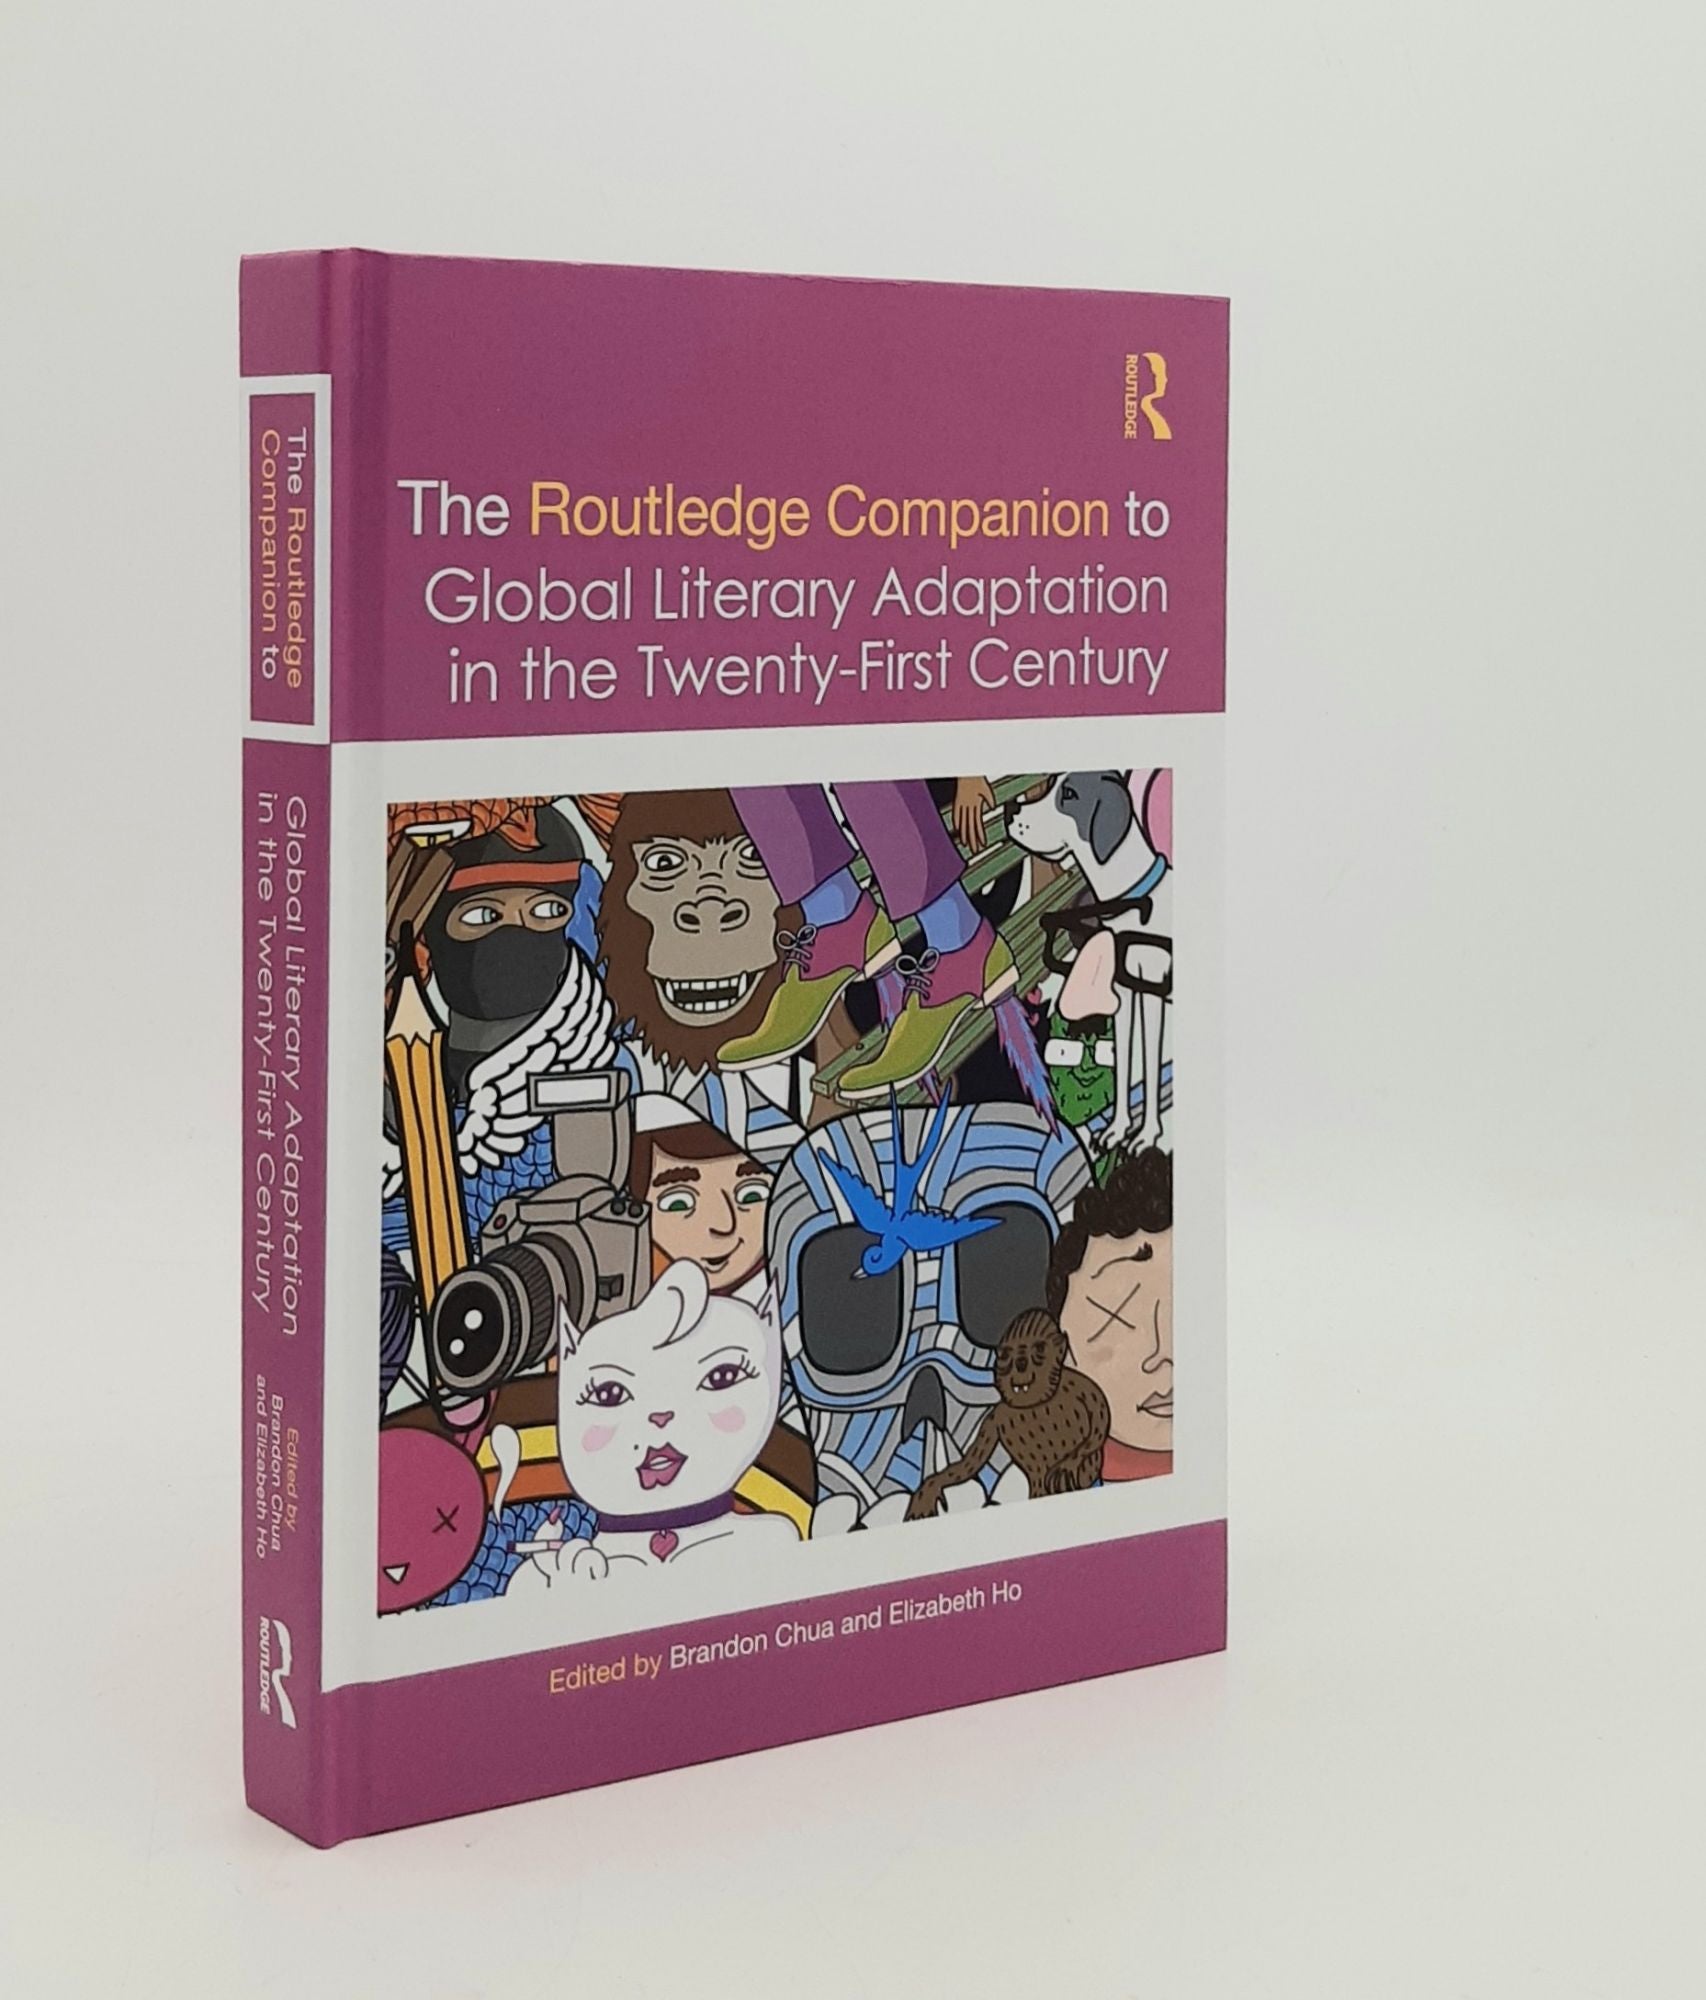 CHUA Brandon, HO Elizabeth - The Routledge Companion to Global Literary Adaptation in the Twenty-First Century